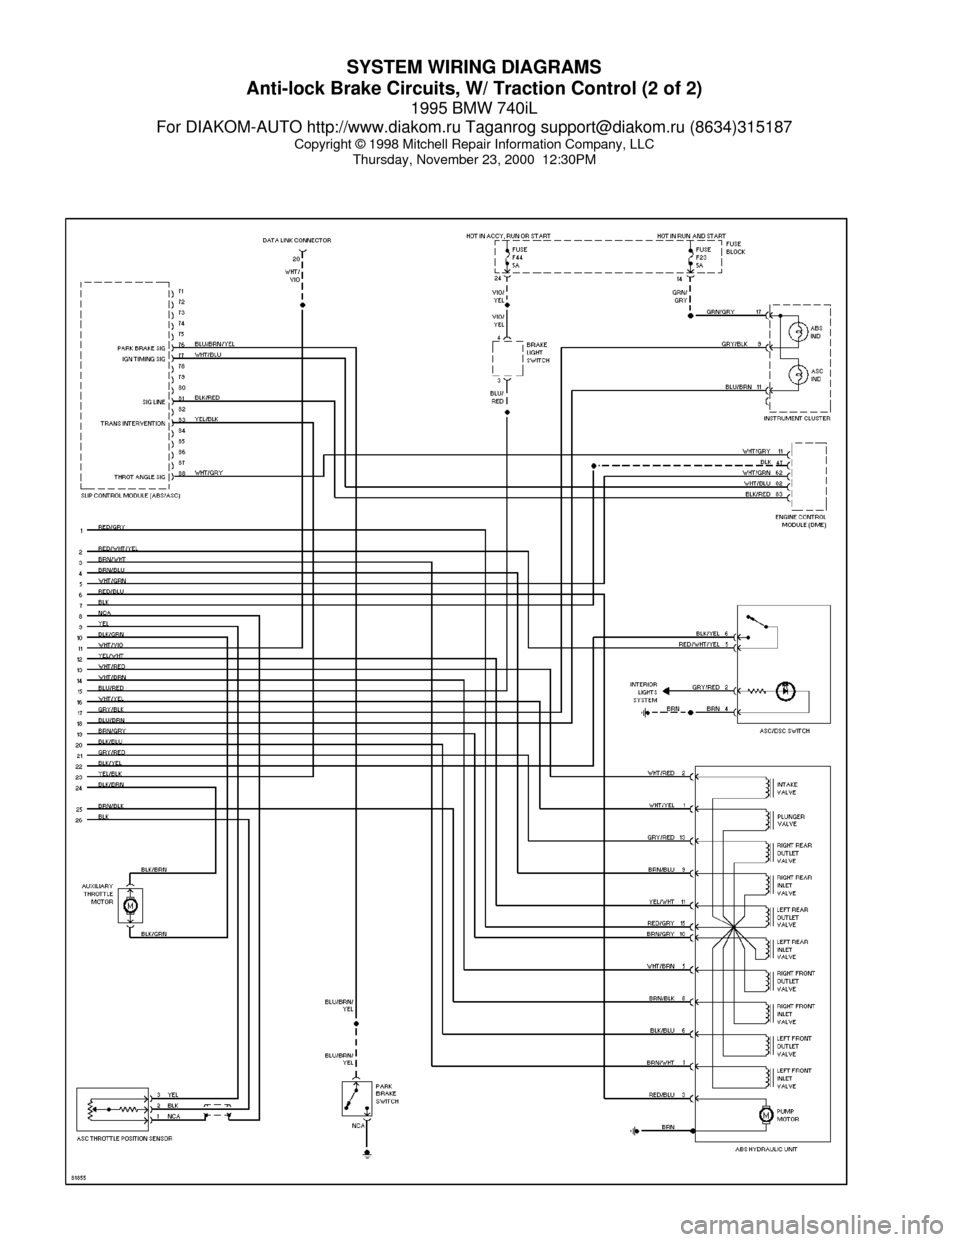 BMW 740il 1995 E38 System Wiring Diagrams SYSTEM WIRING DIAGRAMS
Anti-lock Brake Circuits, W/ Traction Control (2 of 2)
1995 BMW 740iL
For DIAKOM-AUTO http://www.diakom.ru Taganrog support@diakom.ru (8634)315187
Copyright © 1998 Mitchell Rep